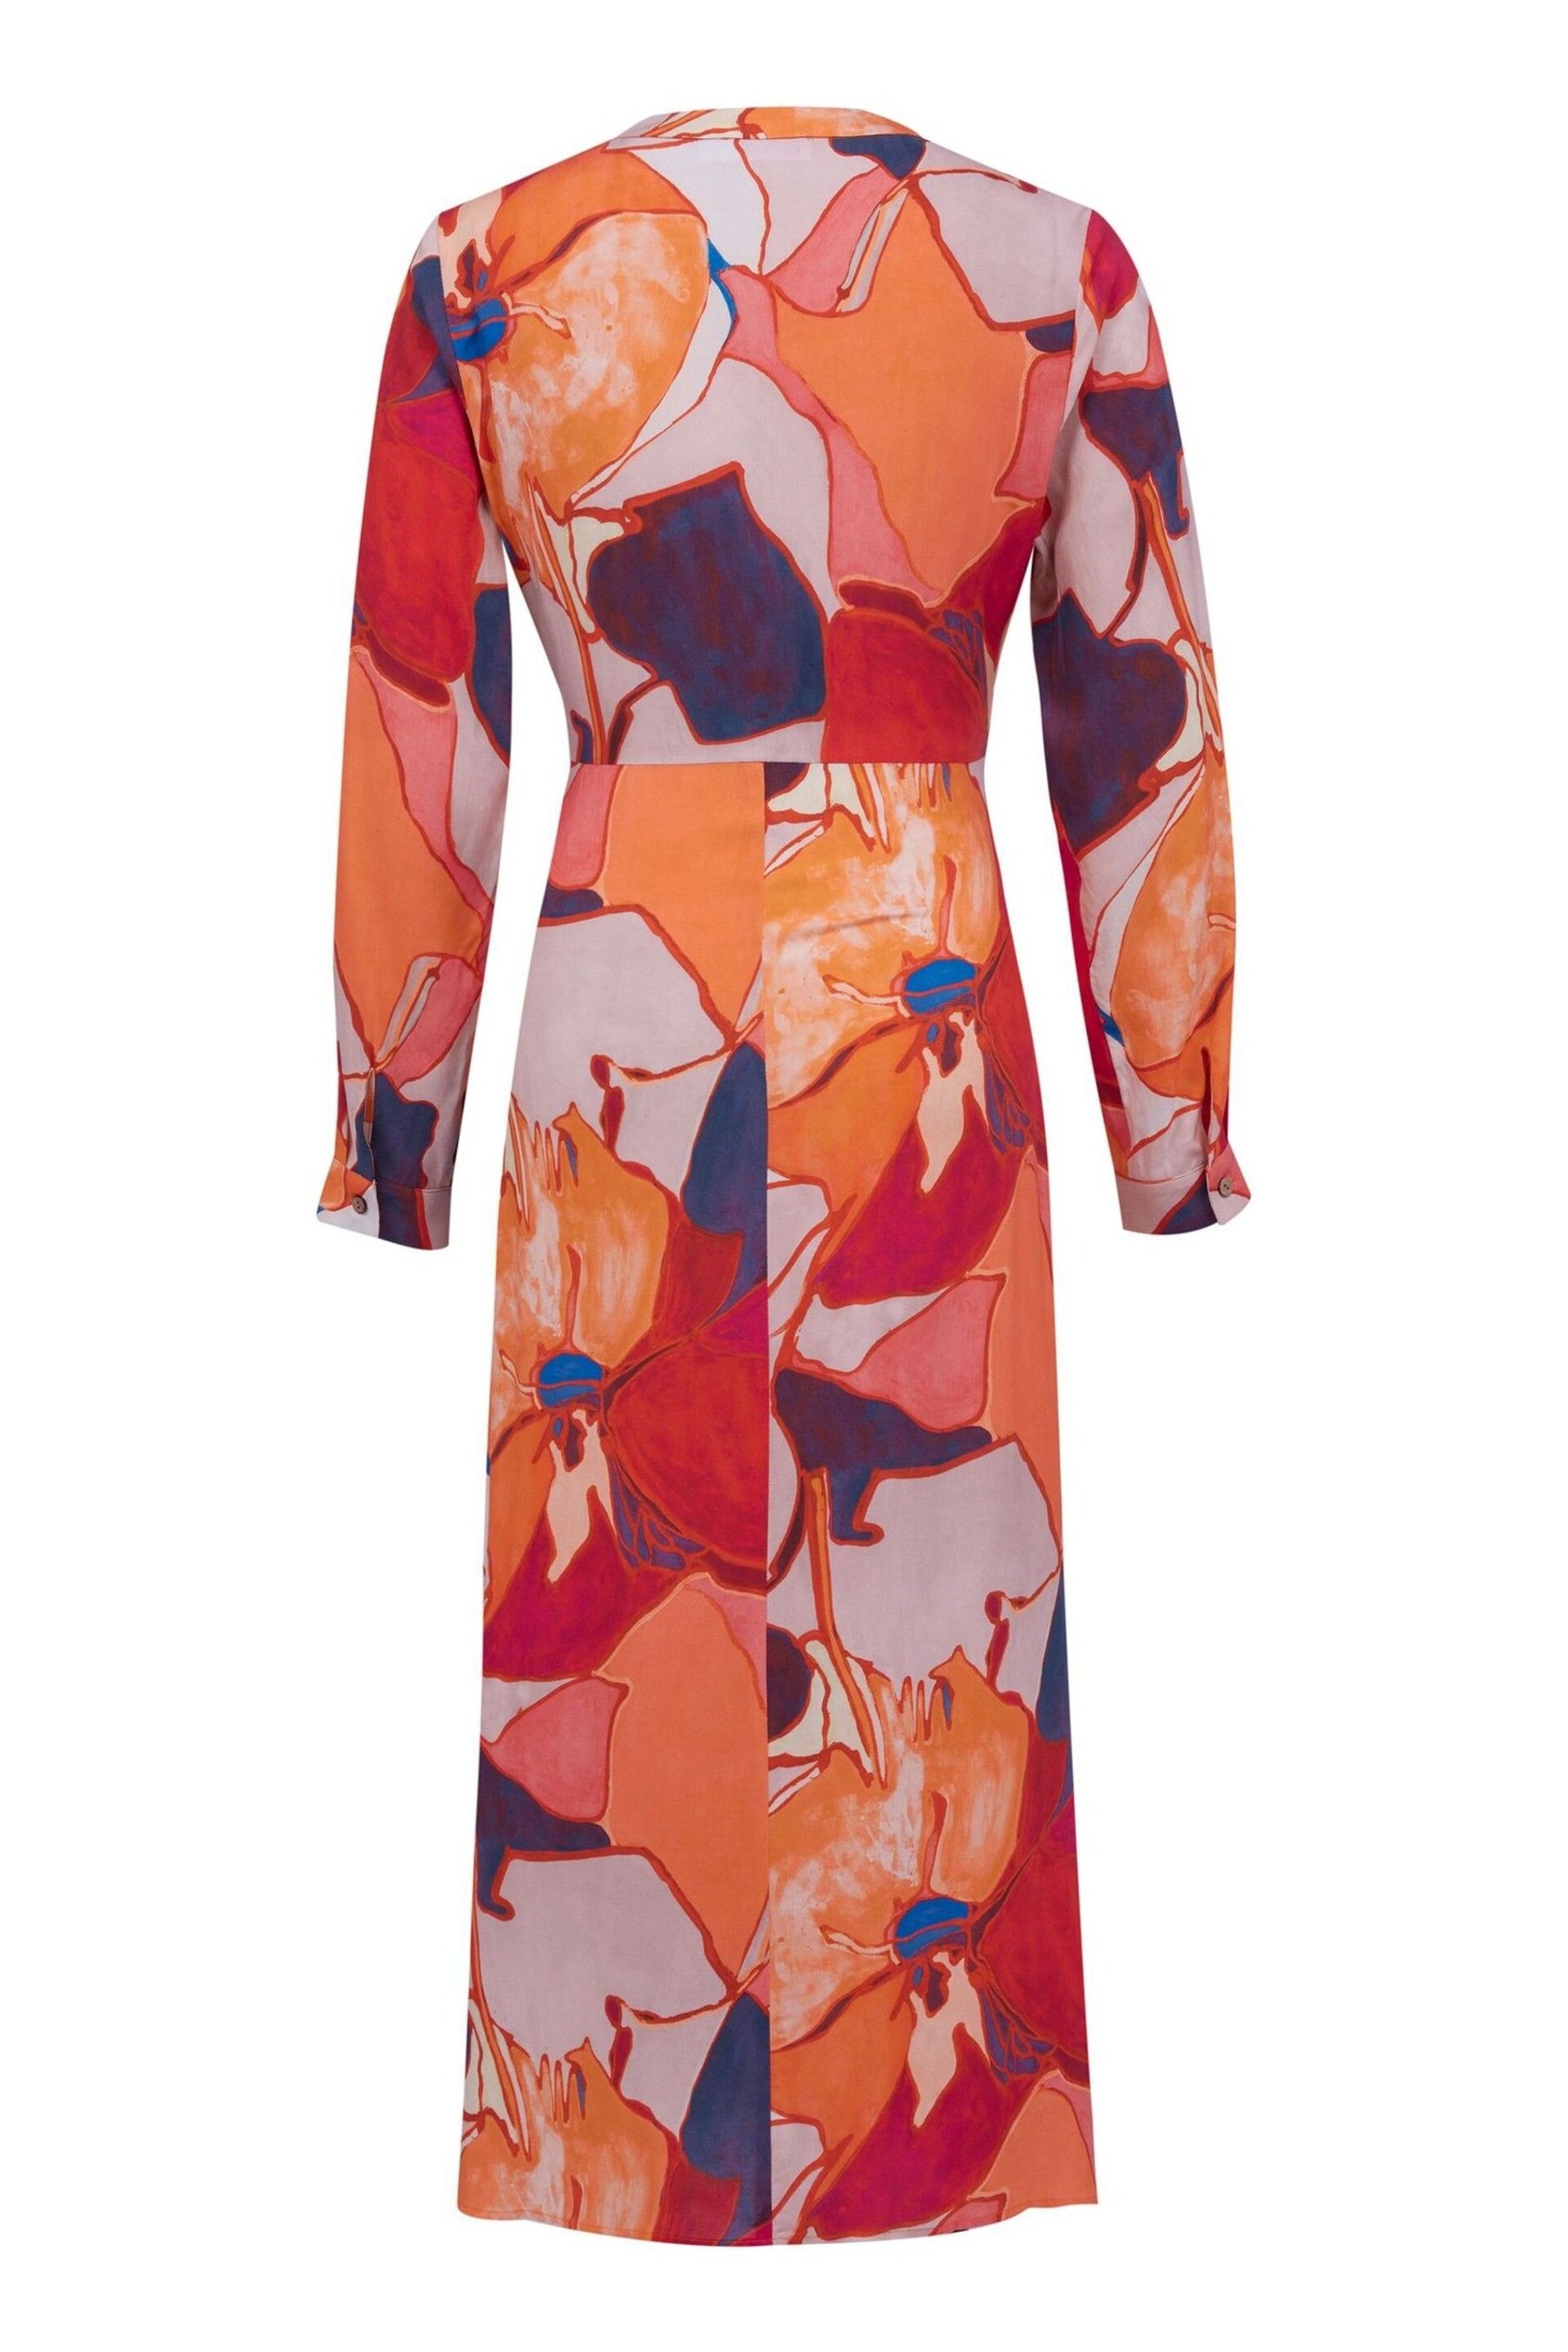 Celtic & Co. Orange Tie Front Midi Dress - Image 5 of 8